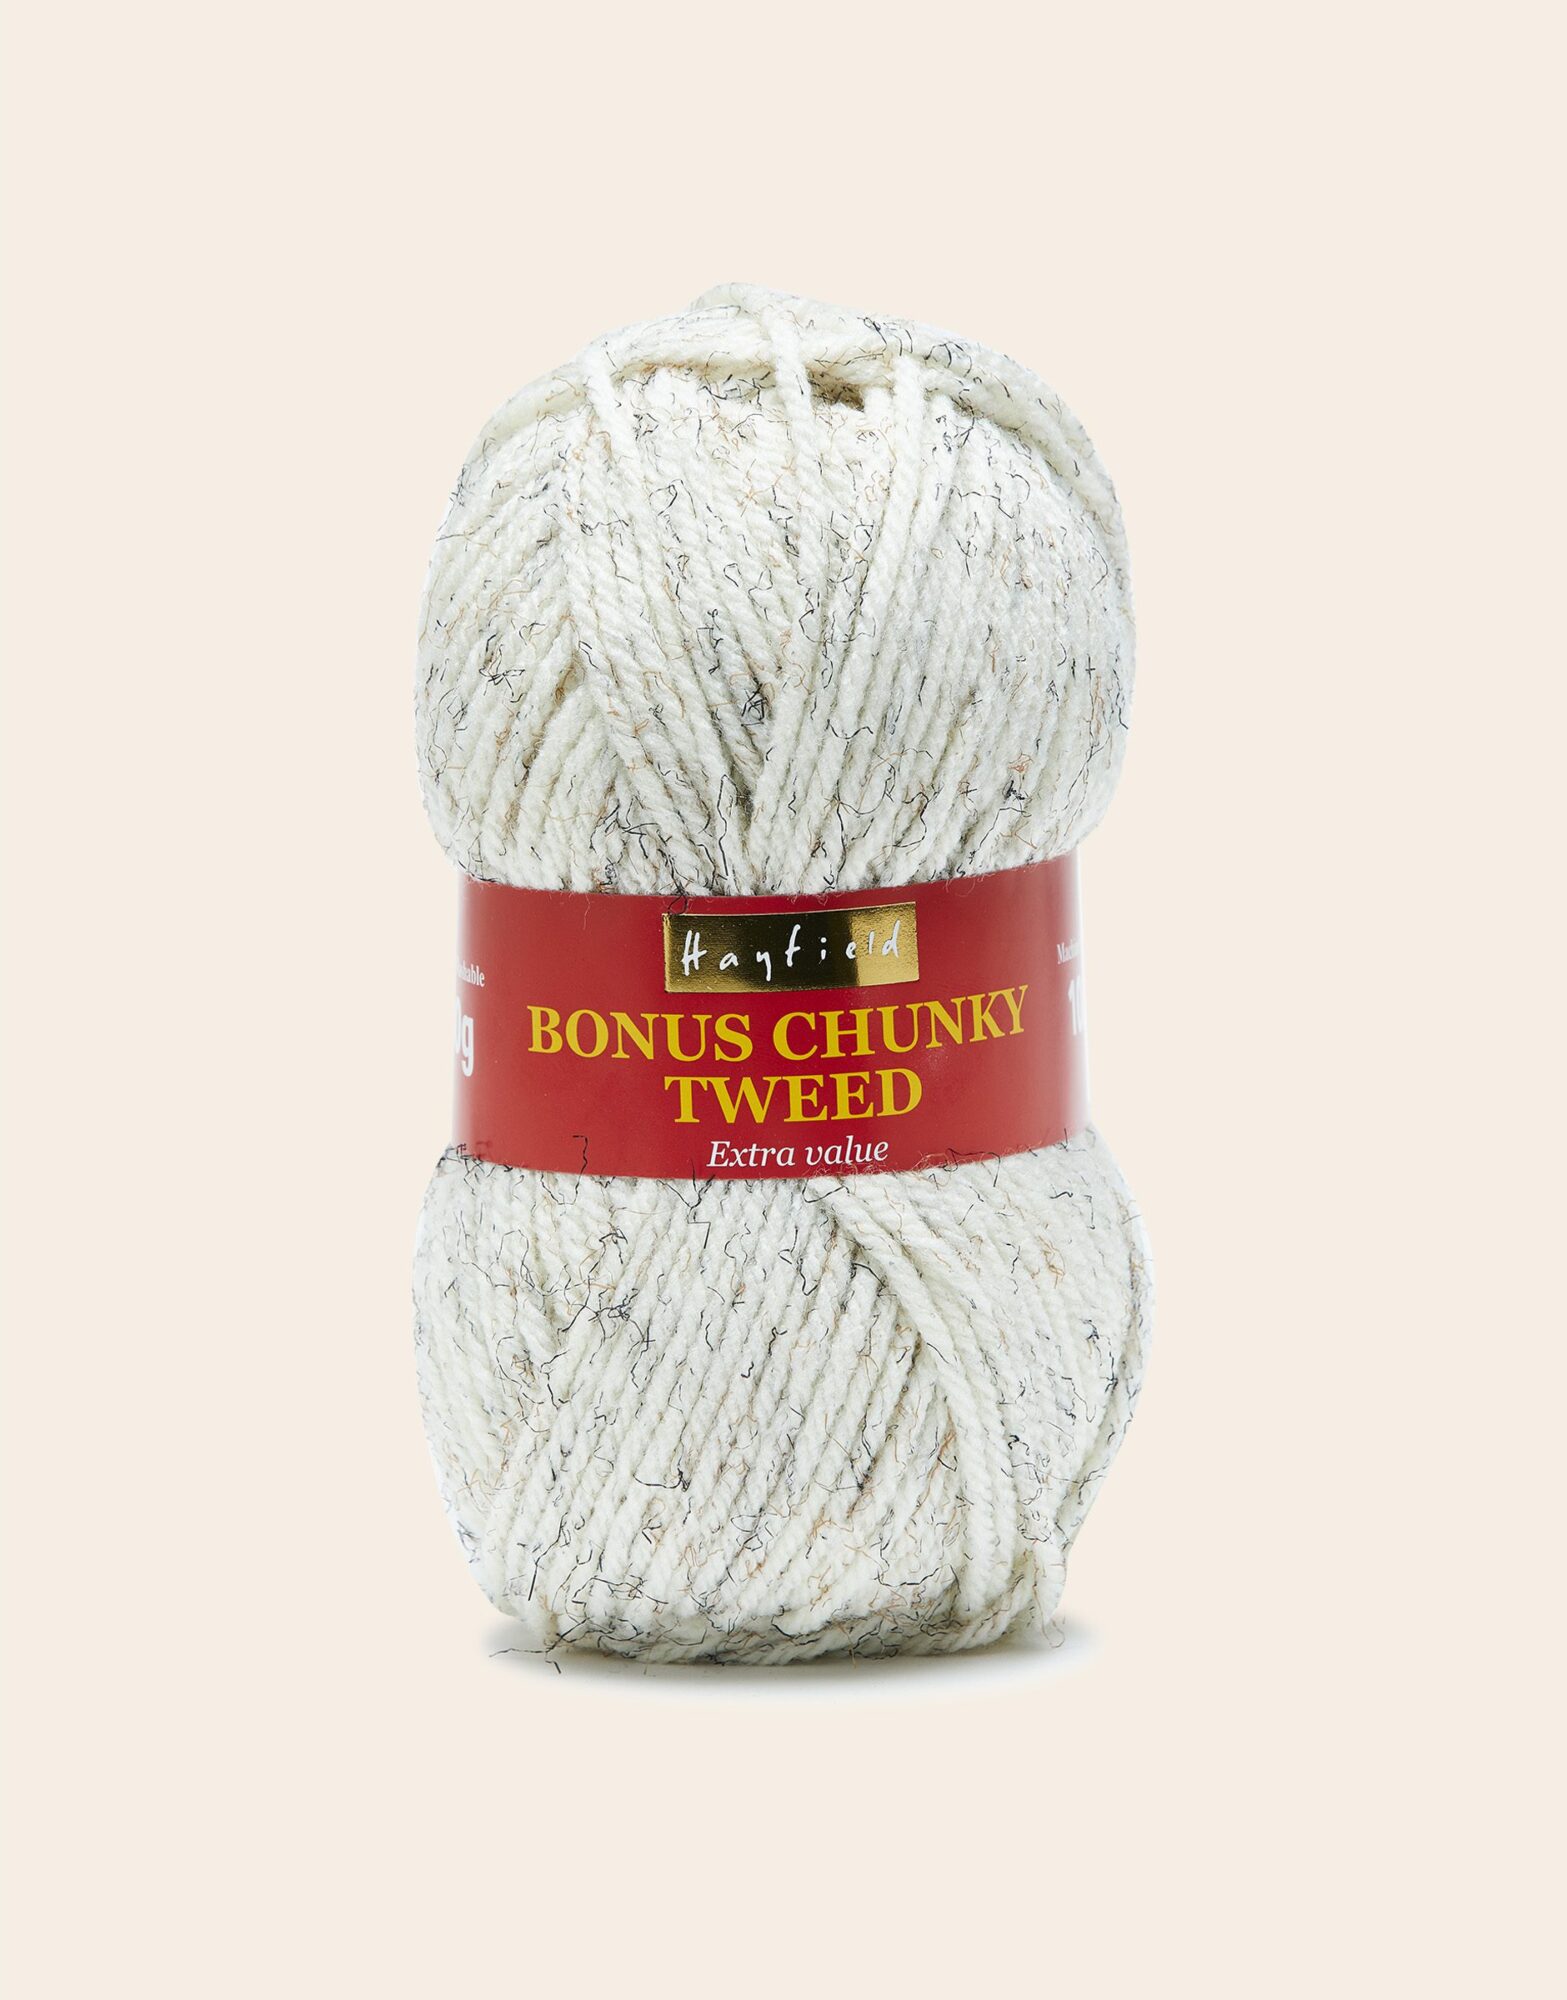 hayfield-bonus-chunky-tweed